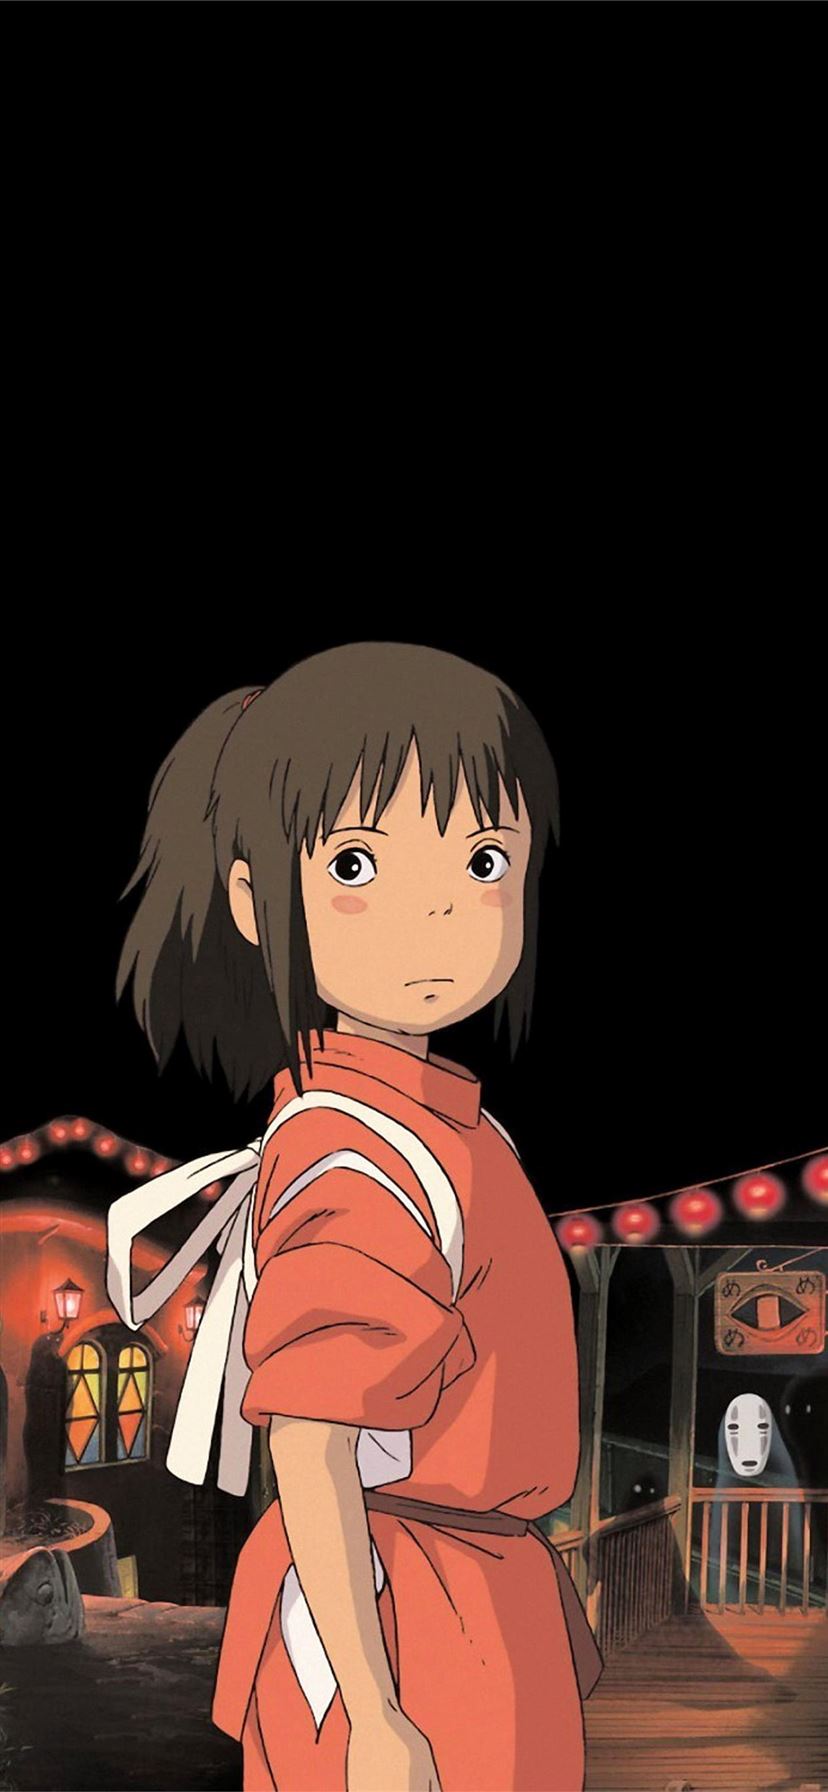 Studio Ghibli Wallpapers  Top 35 Best Studio Ghibli Wallpapers Download